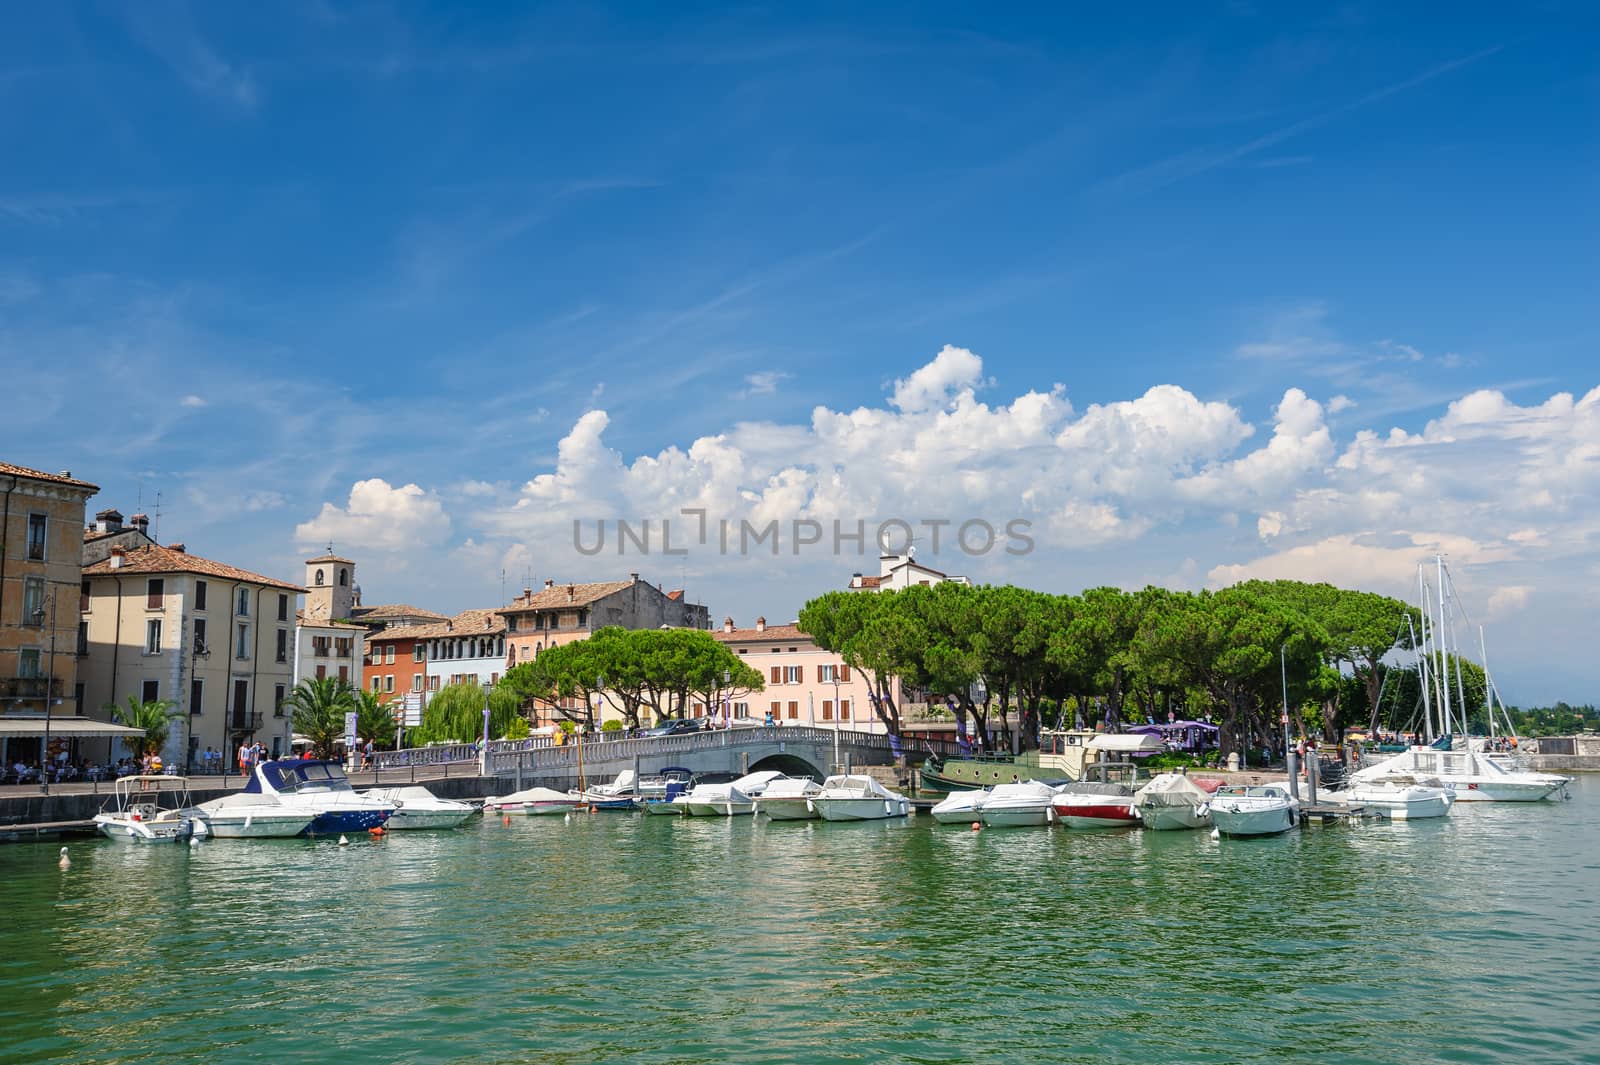 Small yachts in harbor in Desenzano, Garda lake, Italy by starush